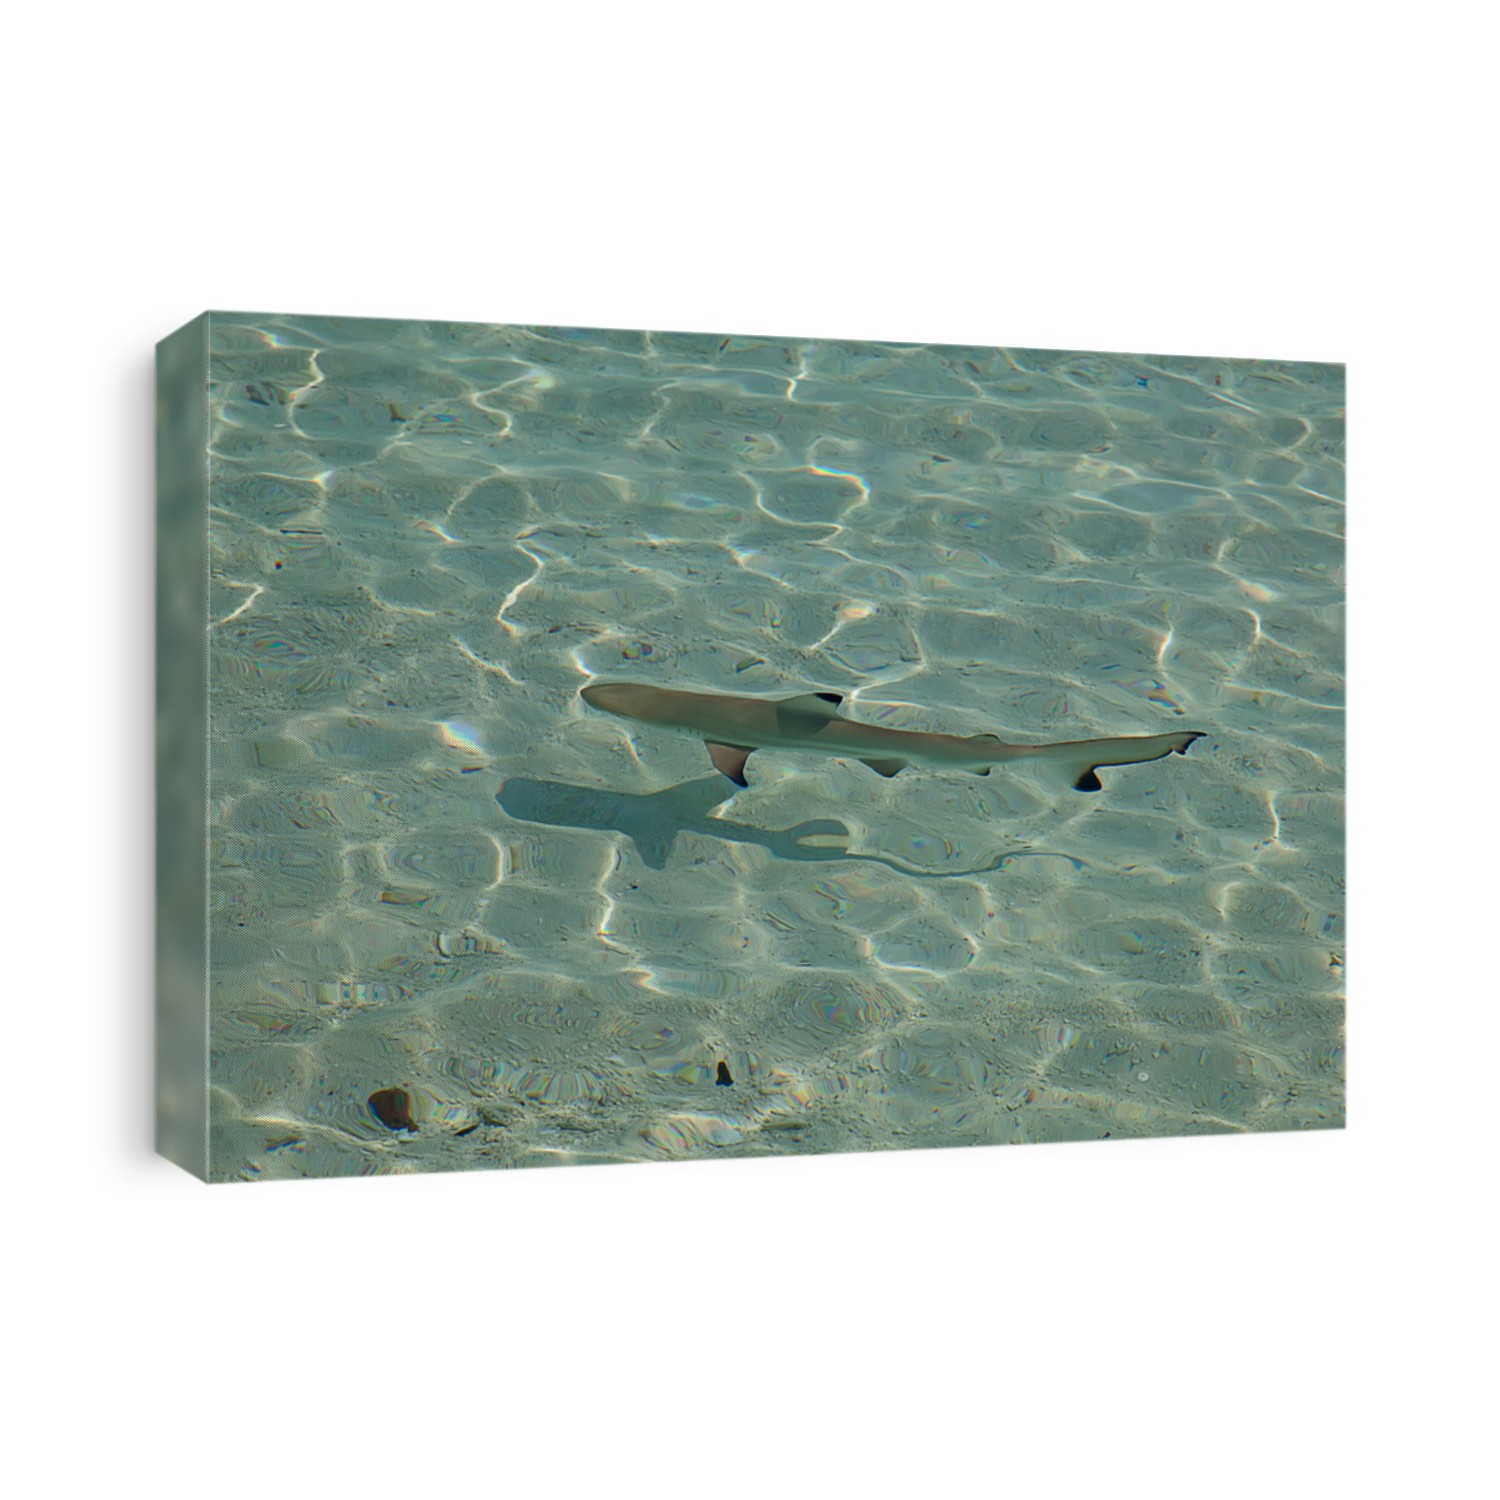 Blacktip reef shark (Carcharhinus melanopterus) in the shallow water